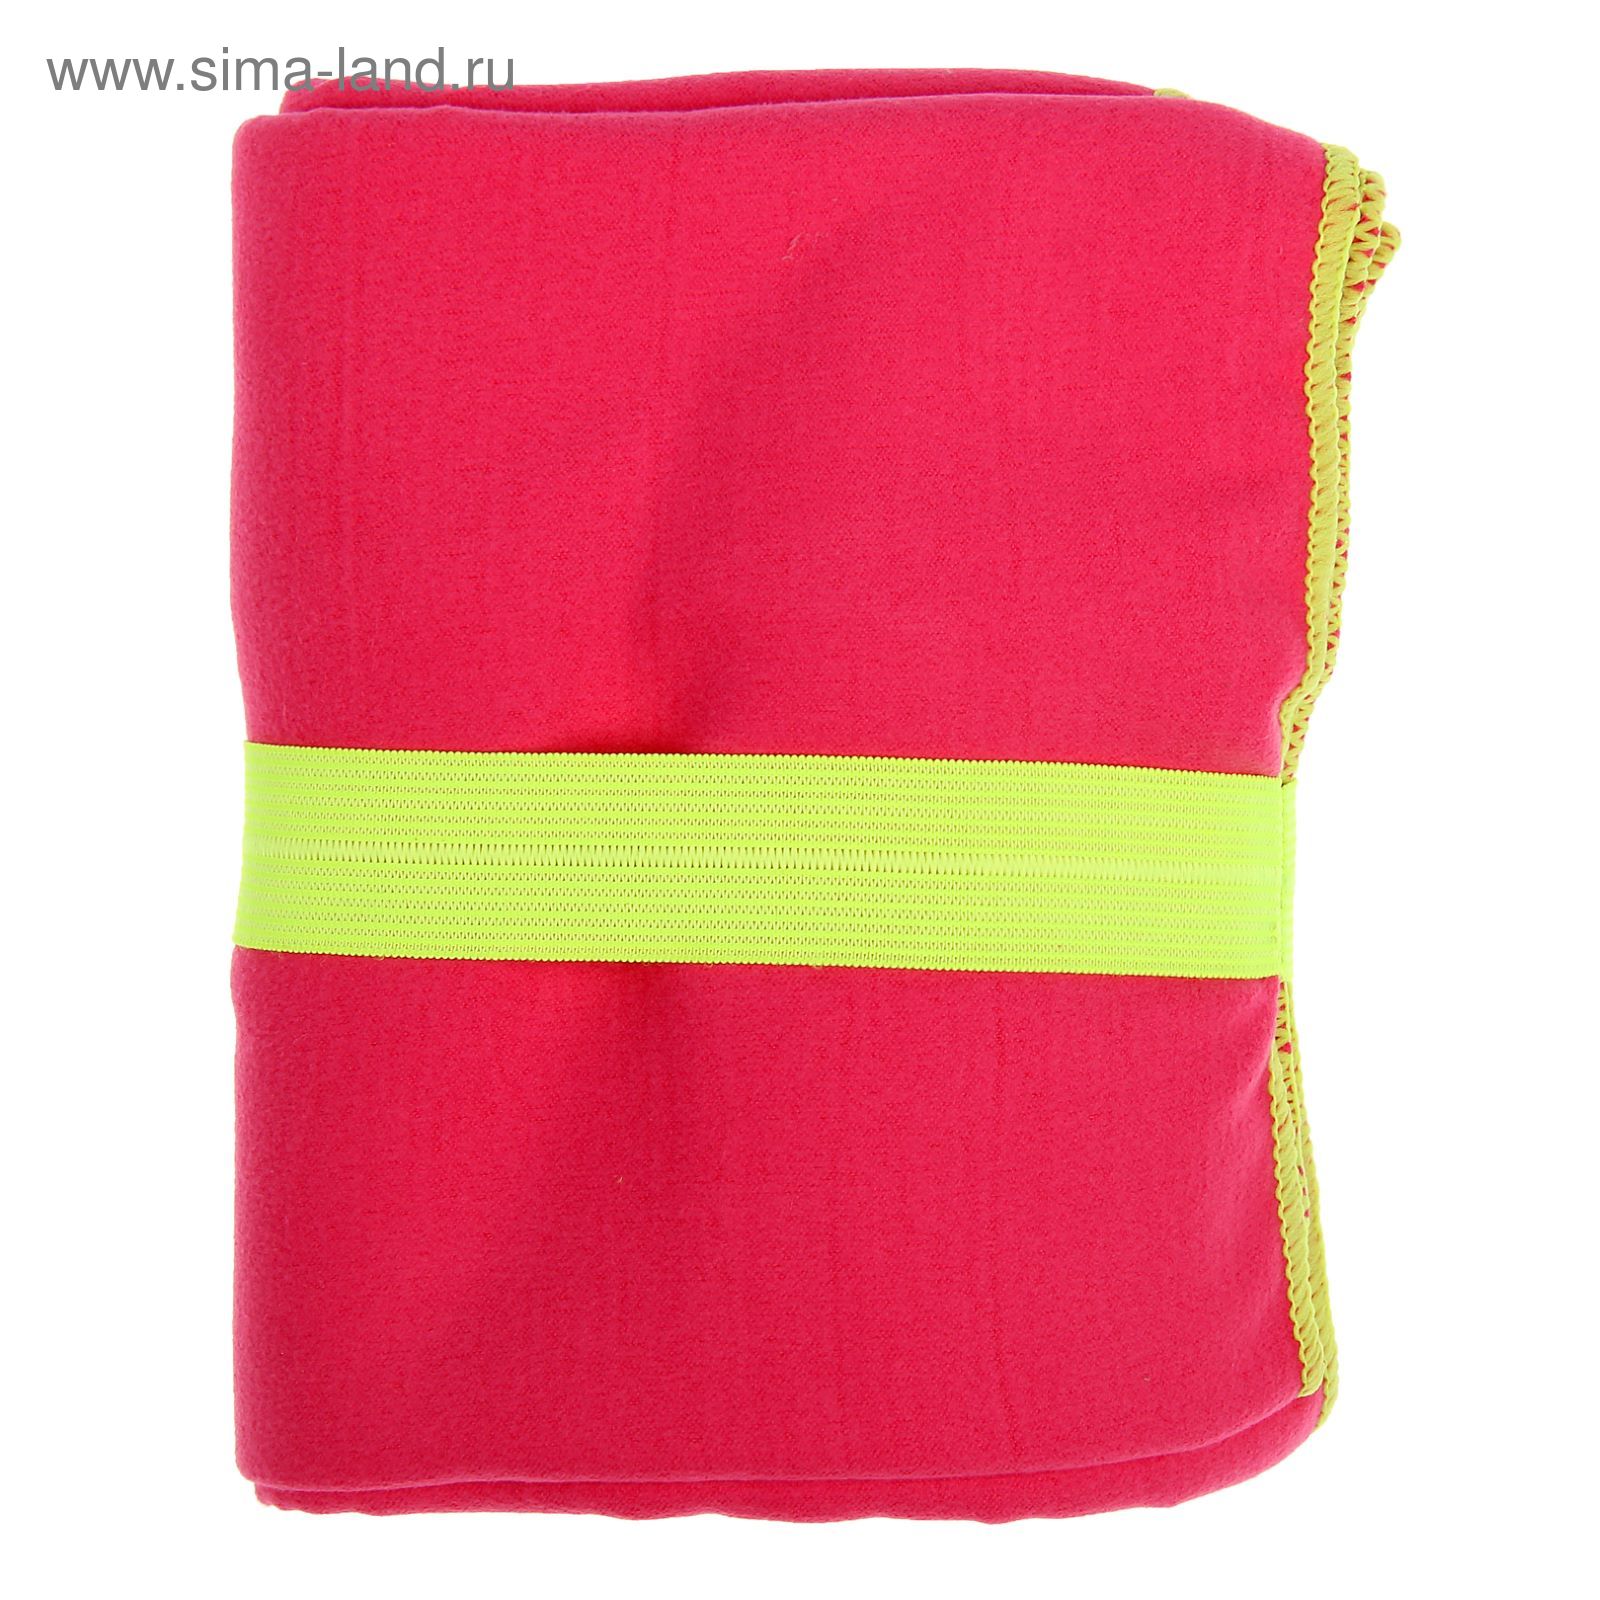 Спортивное полотенце ONLITOP, размер 70х90 см, розовый, 200 г/м2